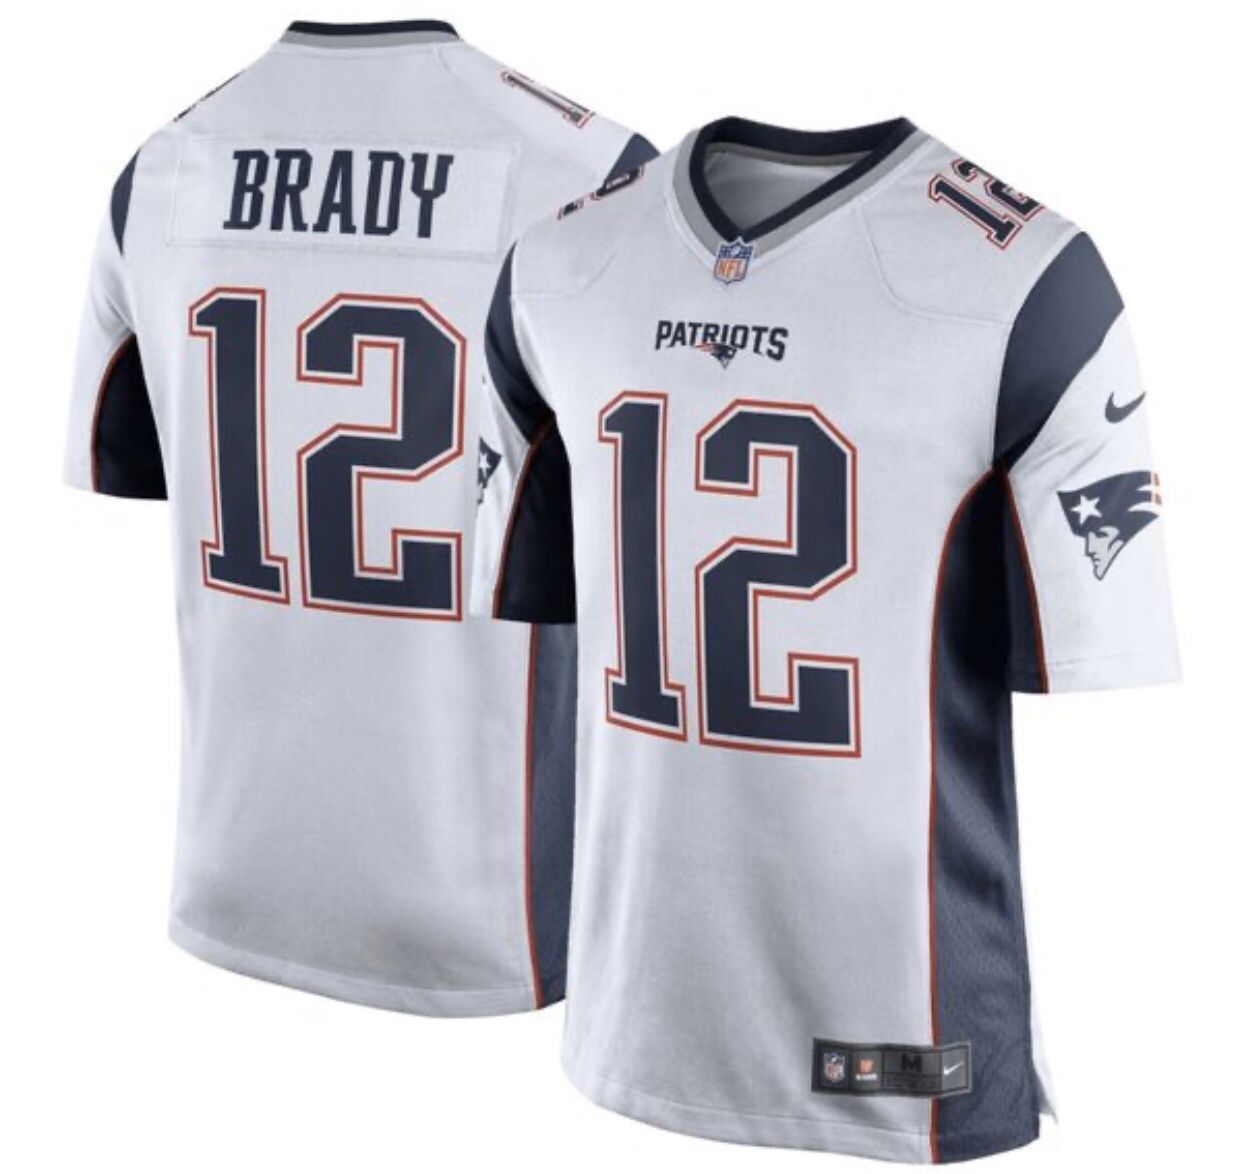 New England Patriots Youth Nike Stitched Tom Brady #12 White Jersey Small